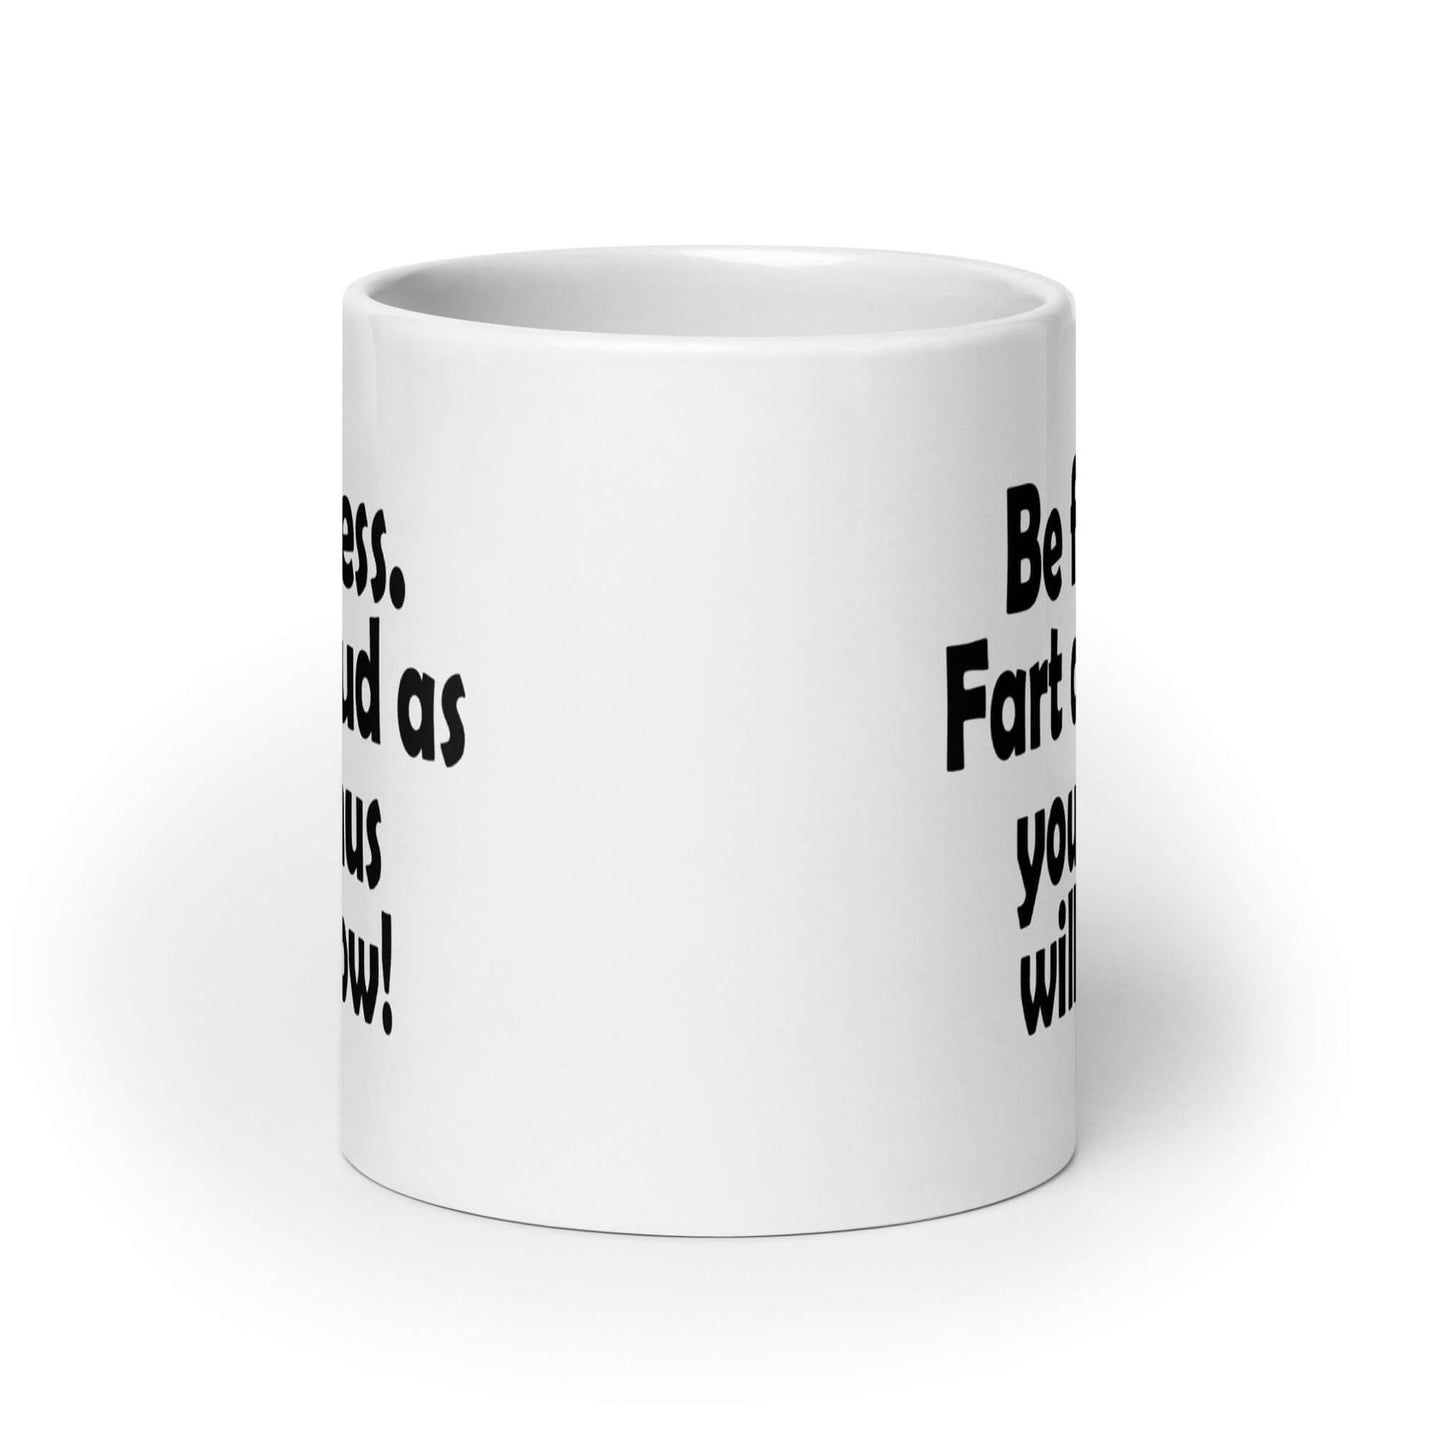 Funny motivational fearless fart joke mug